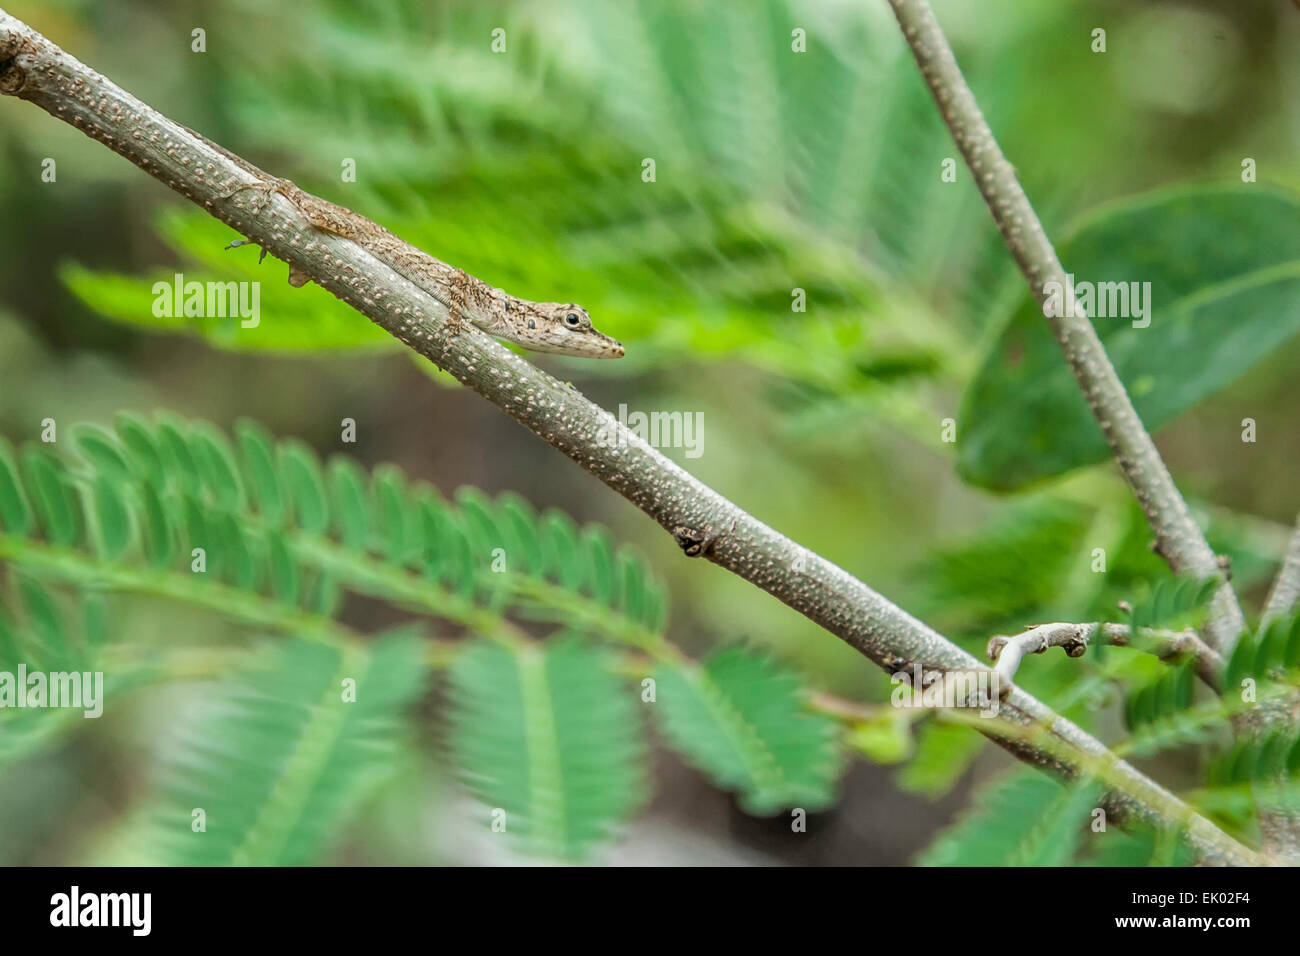 Closeup of Green Lizard Sitting on Branch. Stock Photo